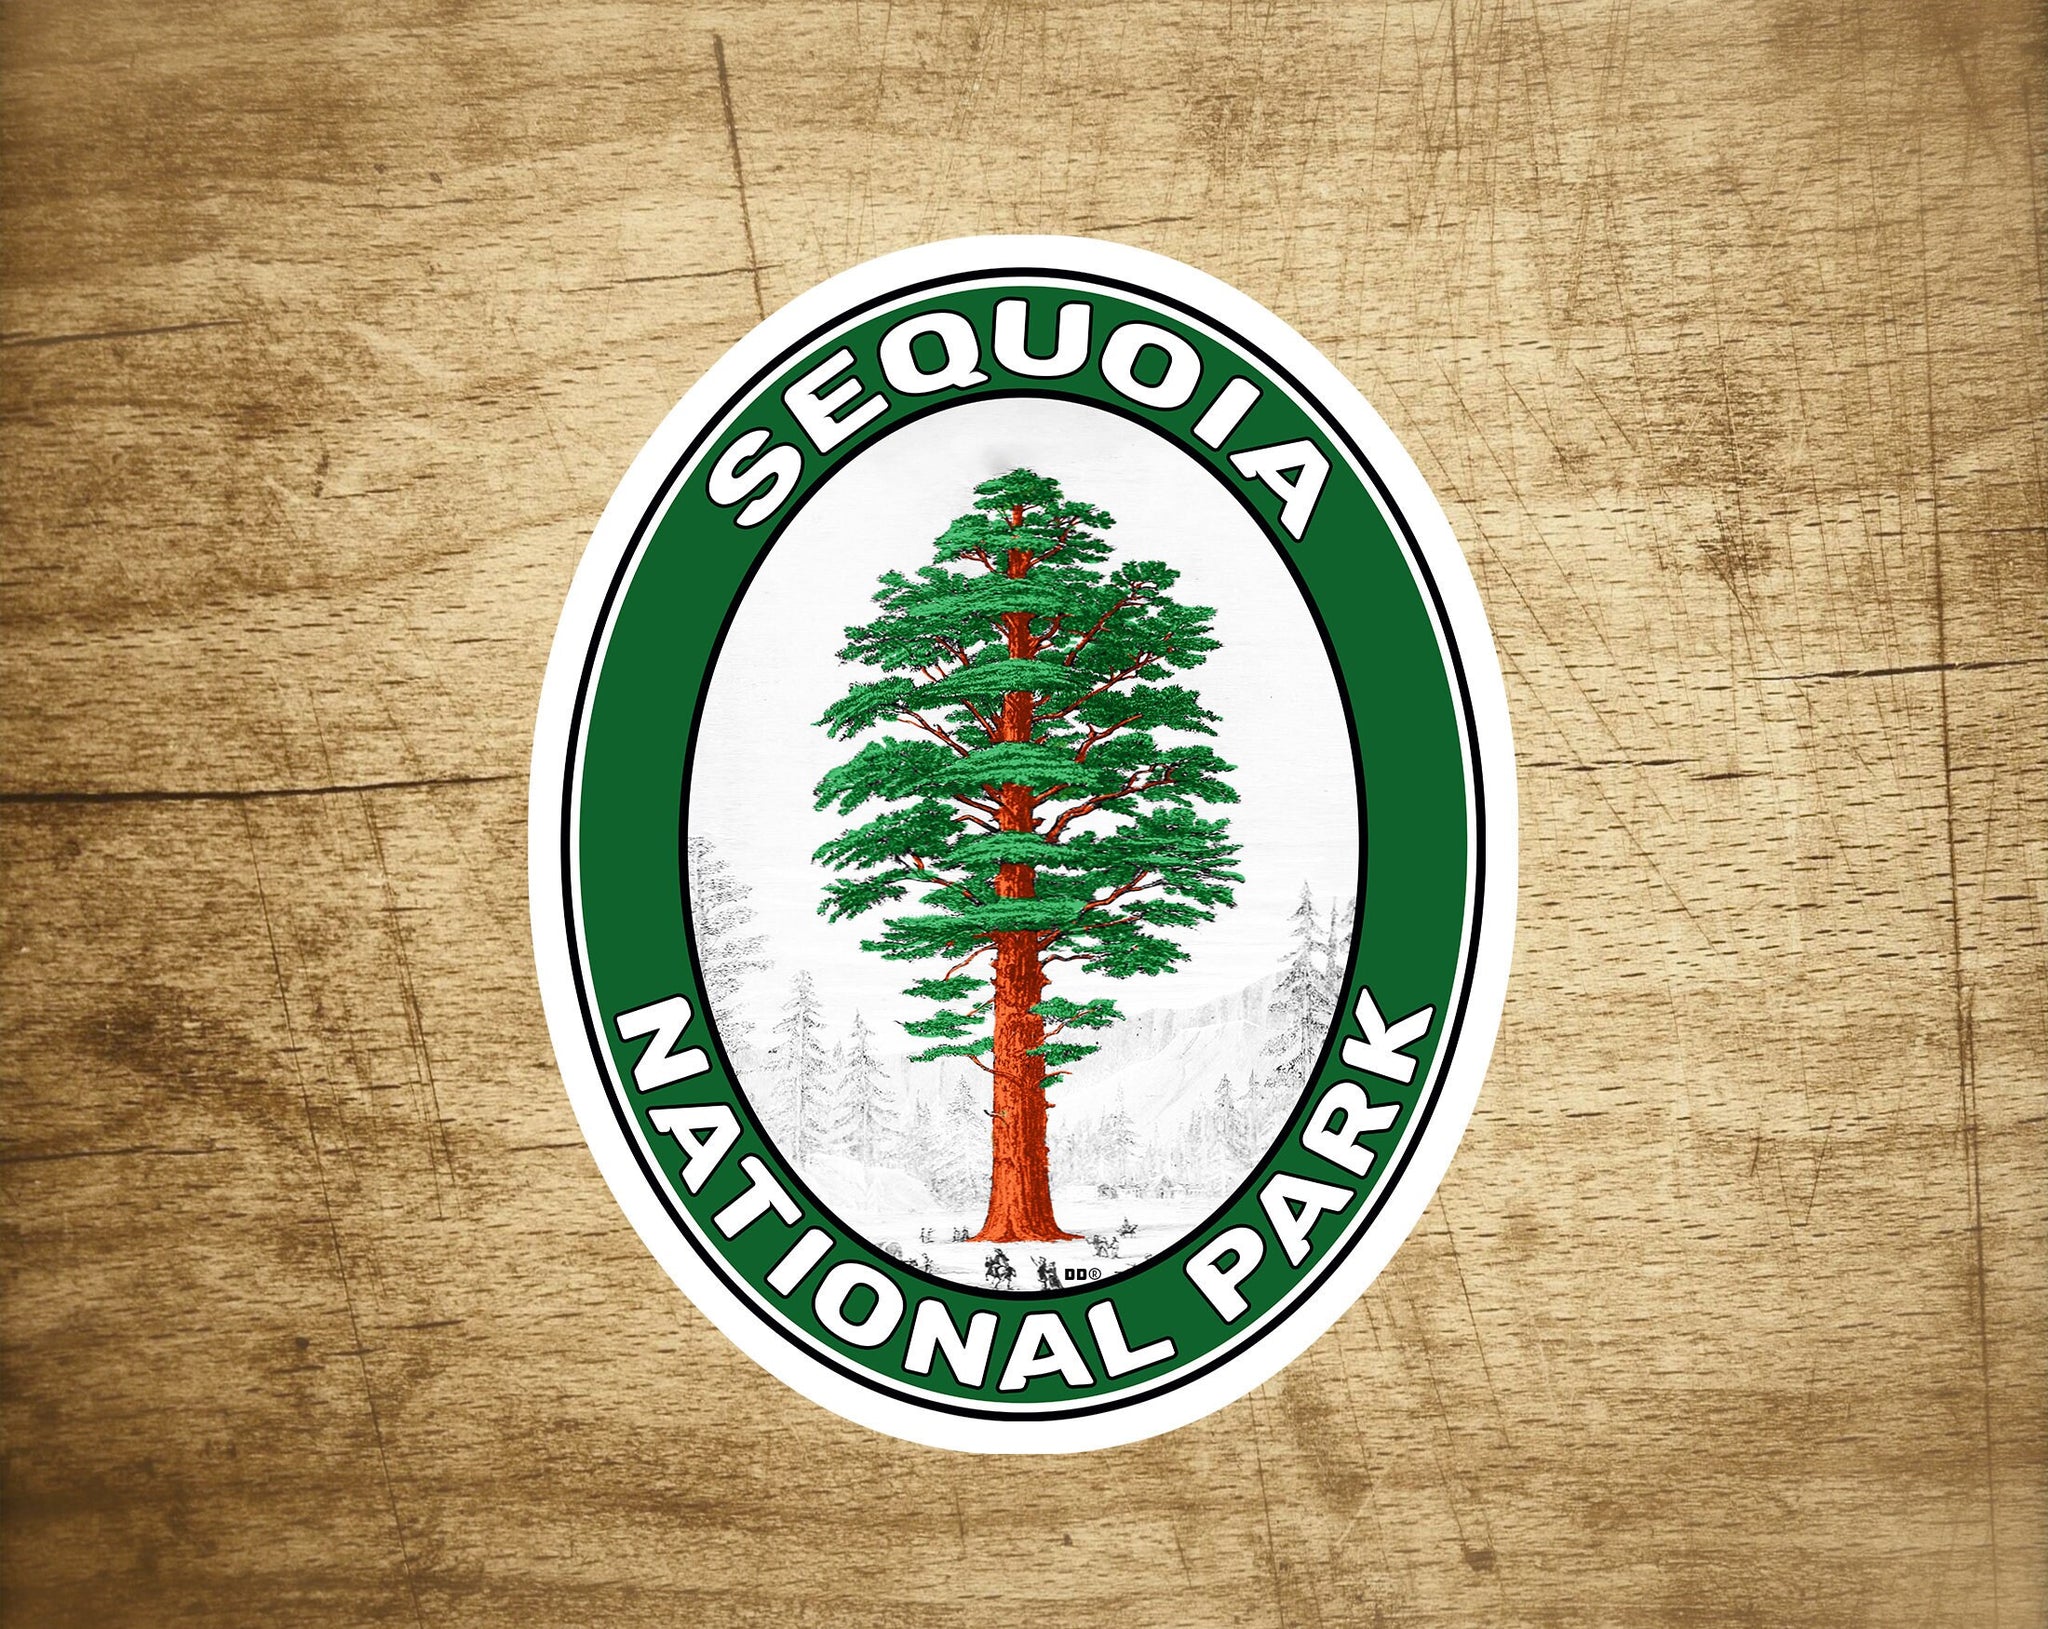 Sequoia National Park California General Sherman Tree Vinyl Decal 2.75" x 3.5"